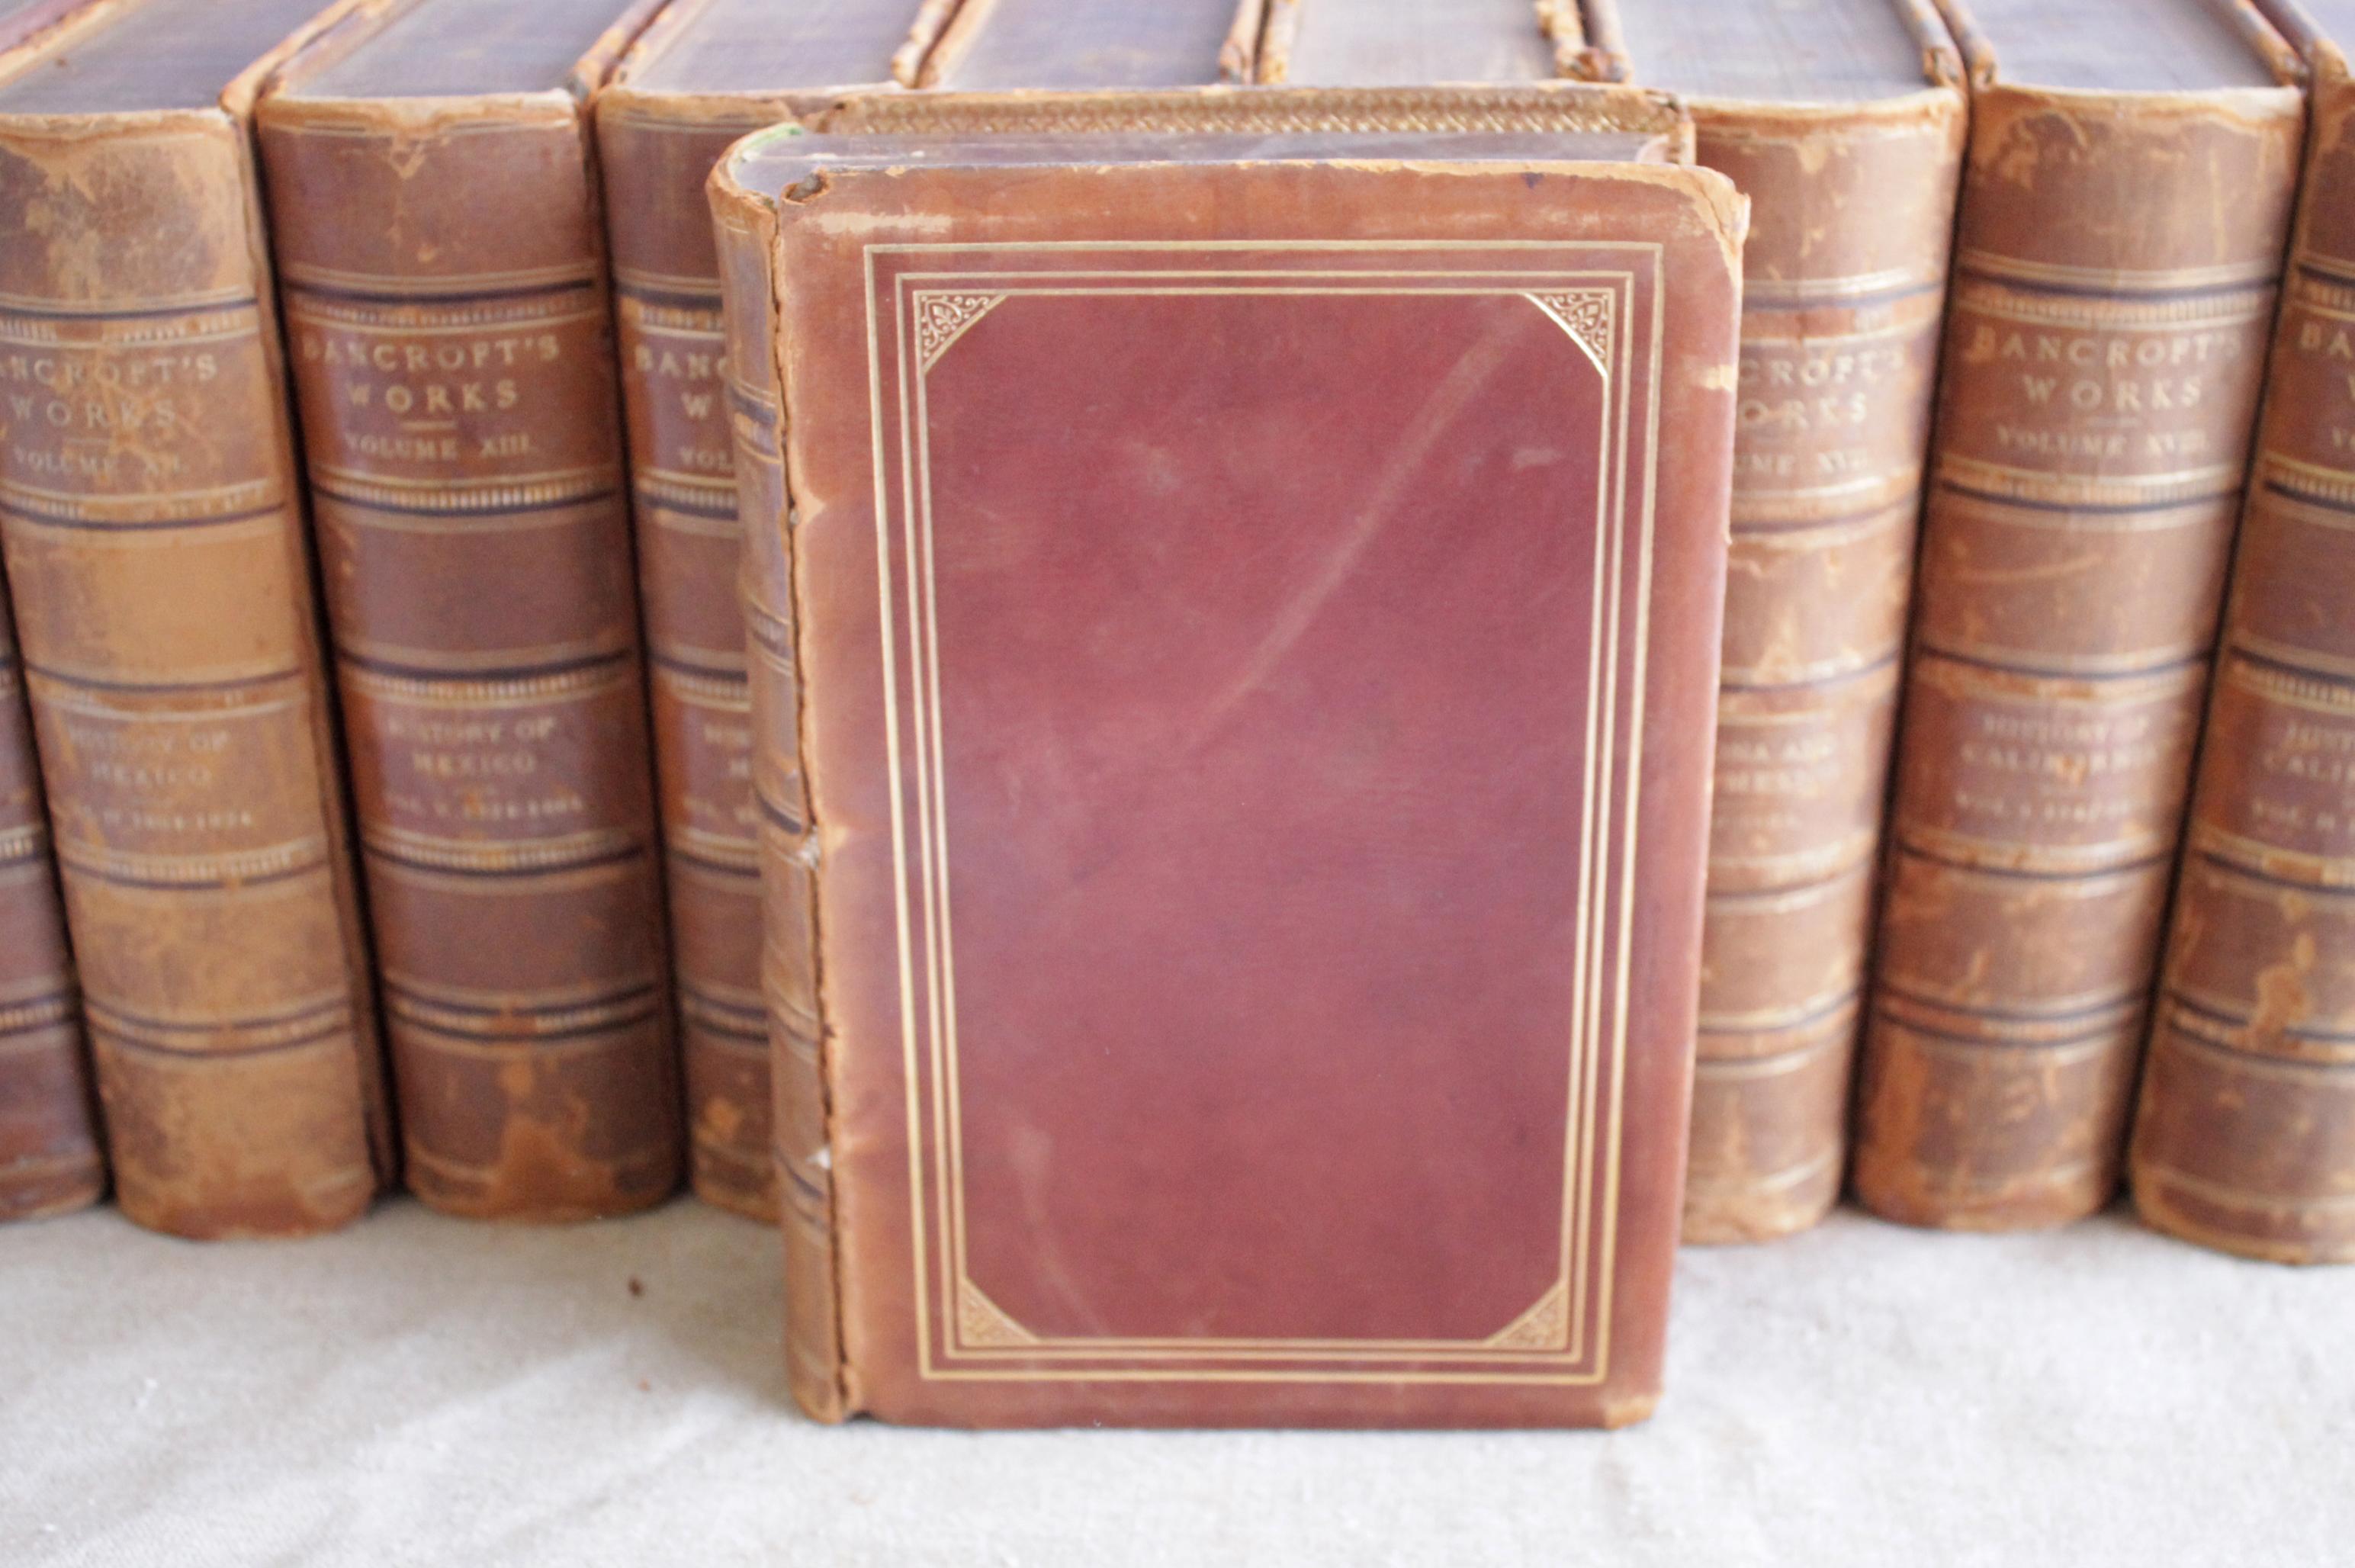 Bancroft Works Antique Leather Bound Books Volume 11 - 20 1